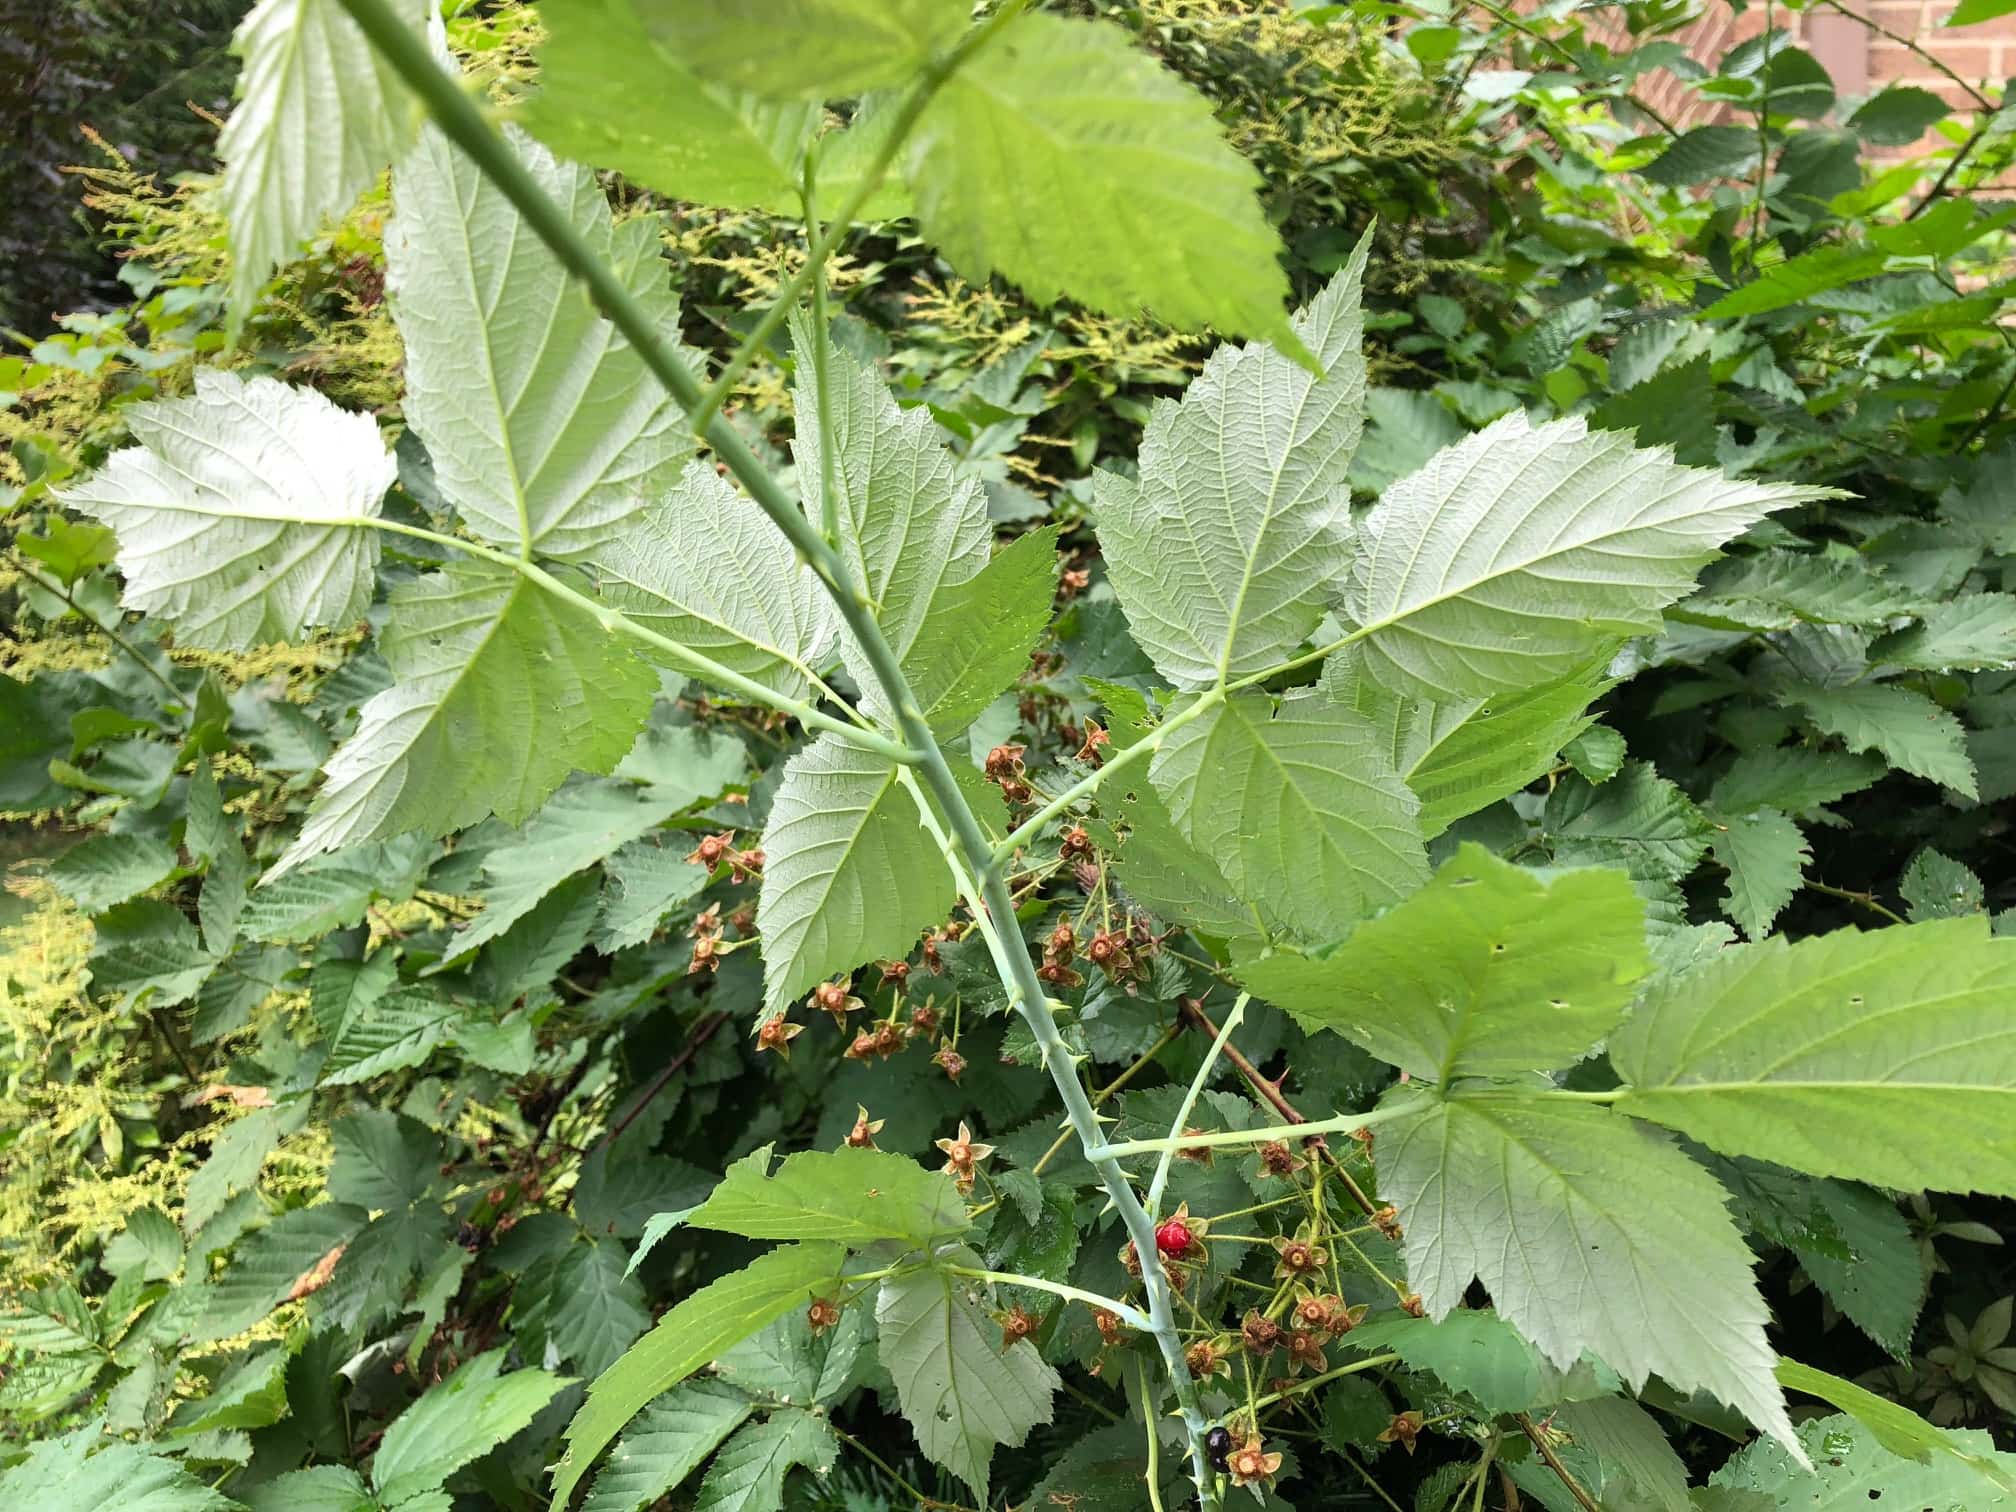 Black raspberry leaves and stems